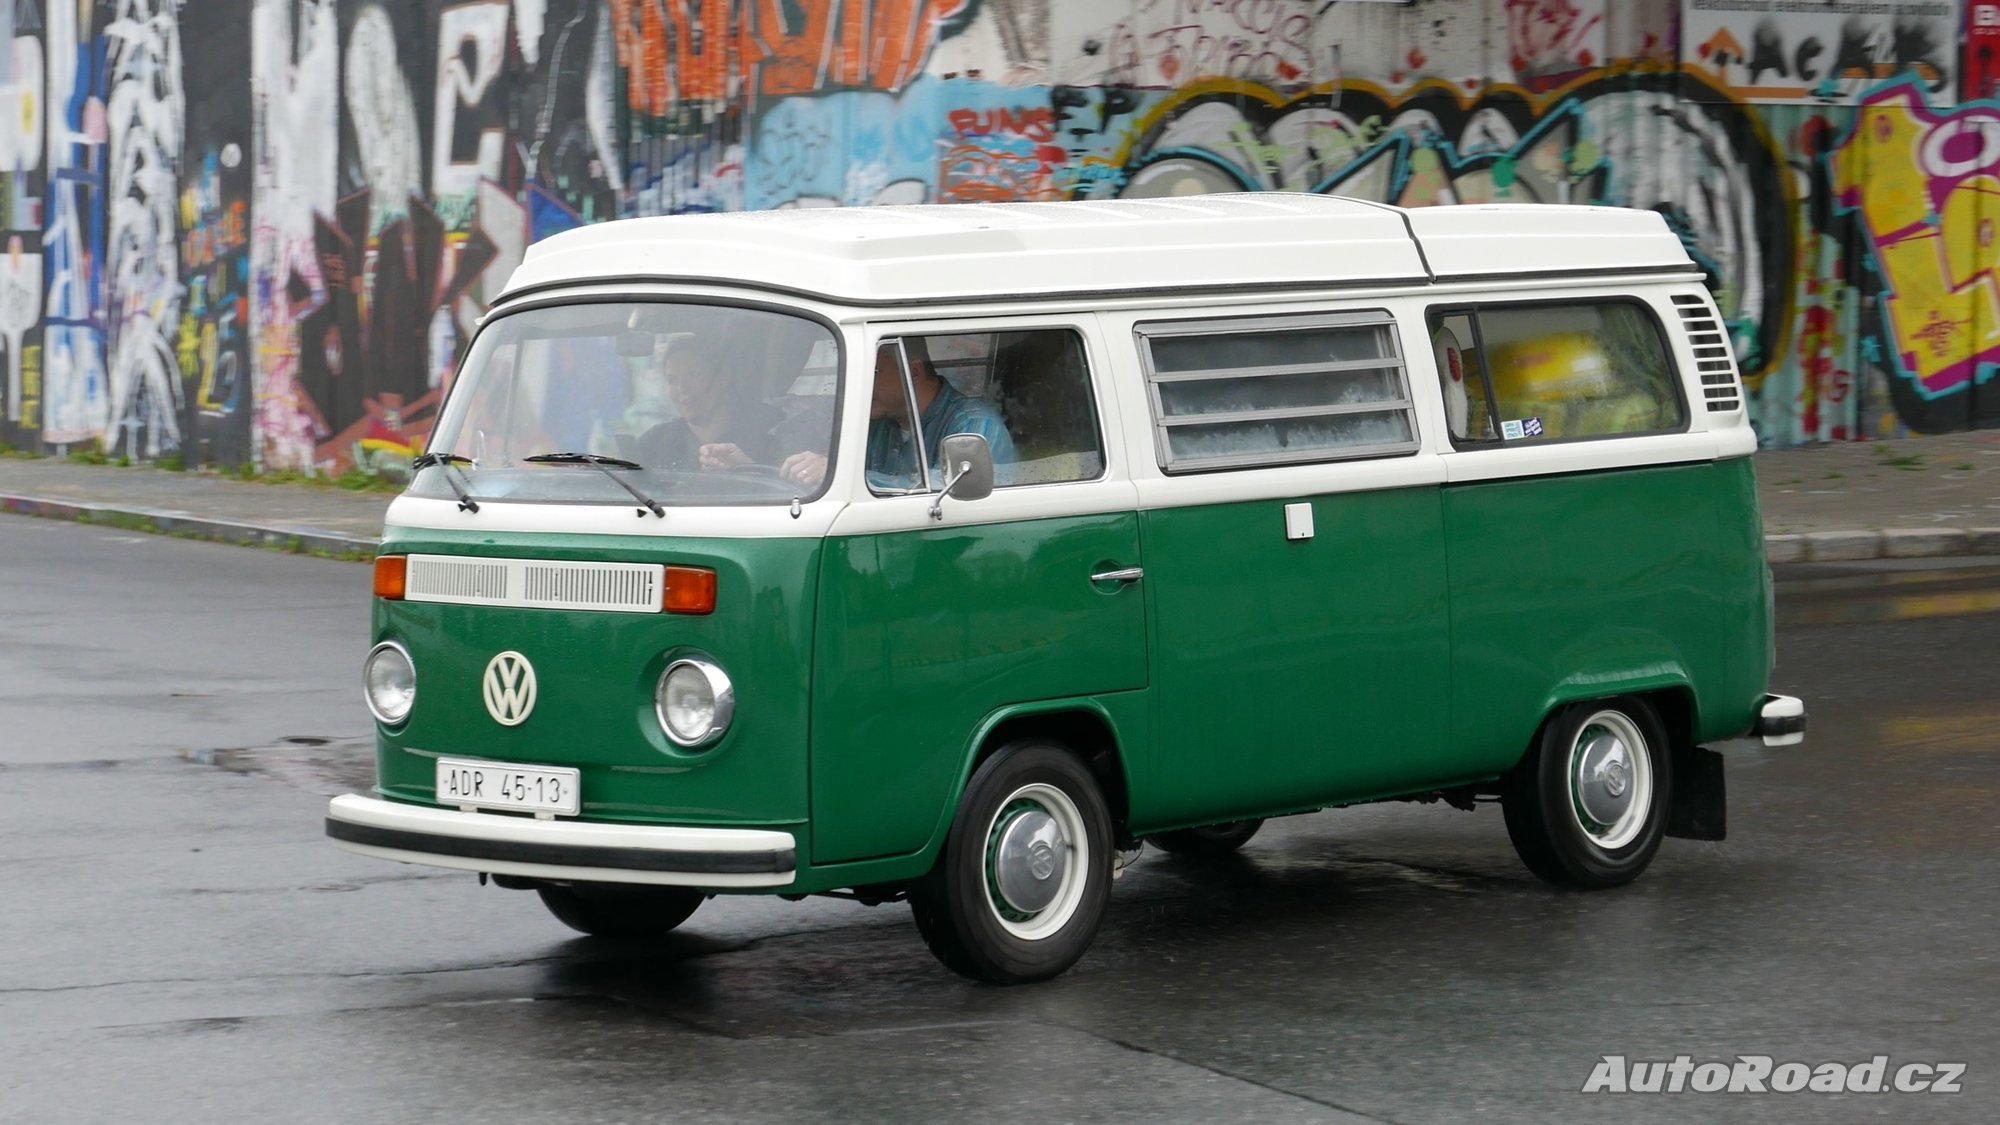 16. ročníku Jarního VW Sprintu / Memoriálu Roberta Kudrny se zúčastnily i modely VW Transporter